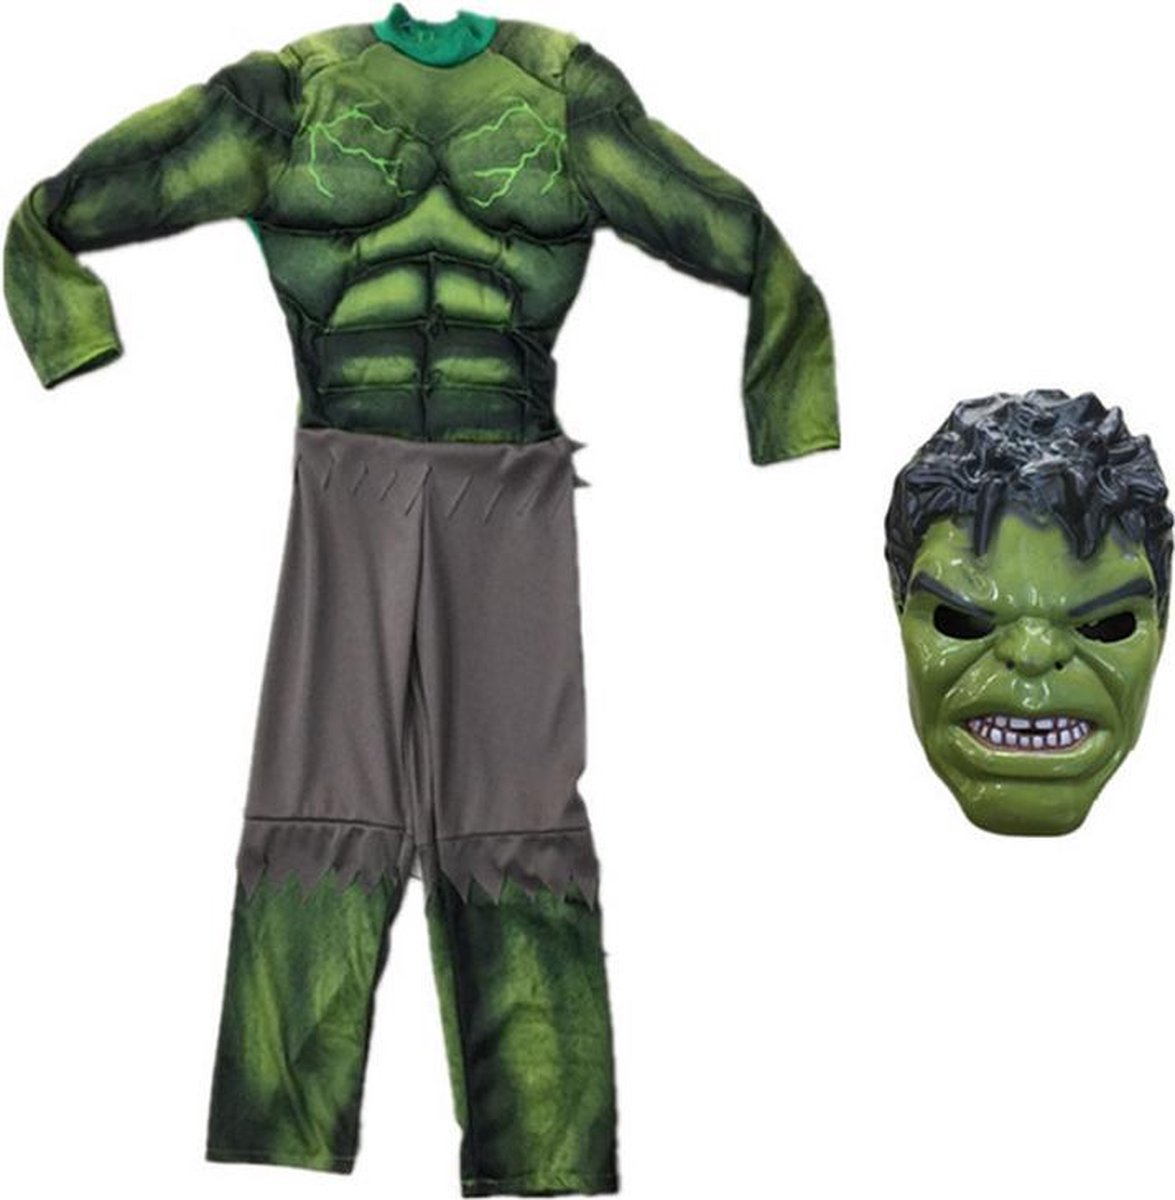 WiseGoods Dress Cute Déguisements Hulk - Superhero Verkleedpak